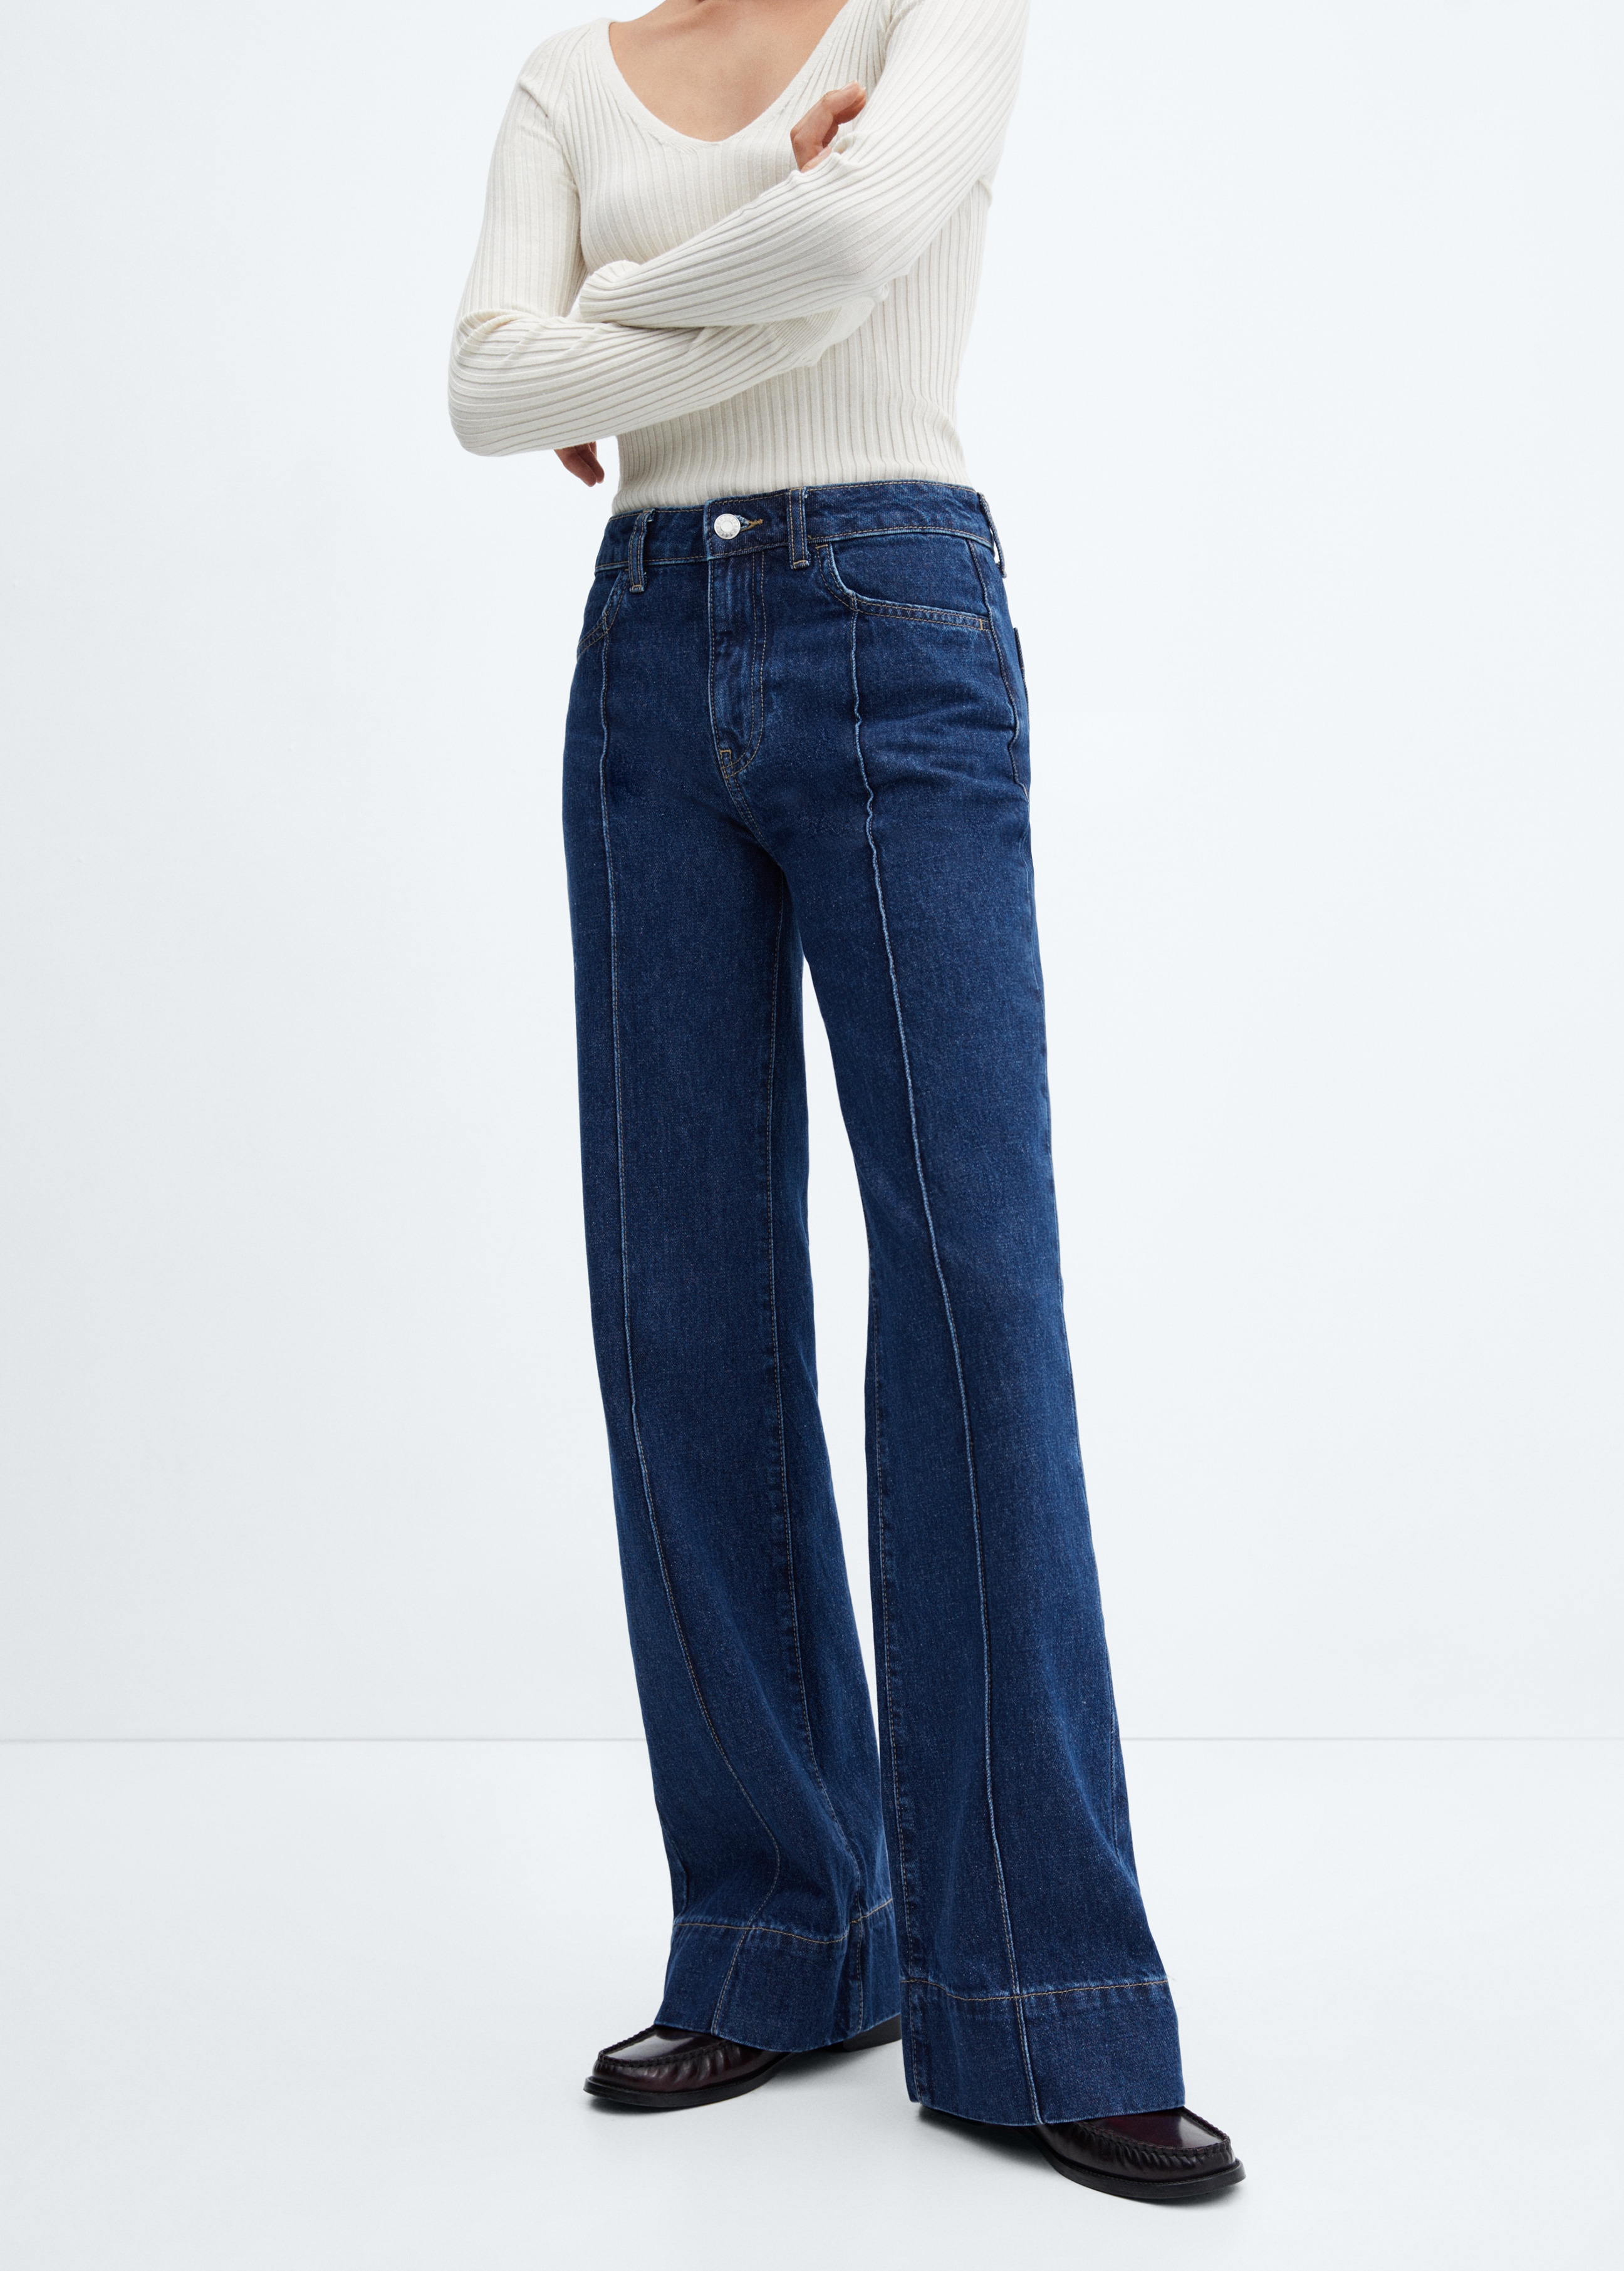 Wideleg jeans with decorative seams - Medium plane